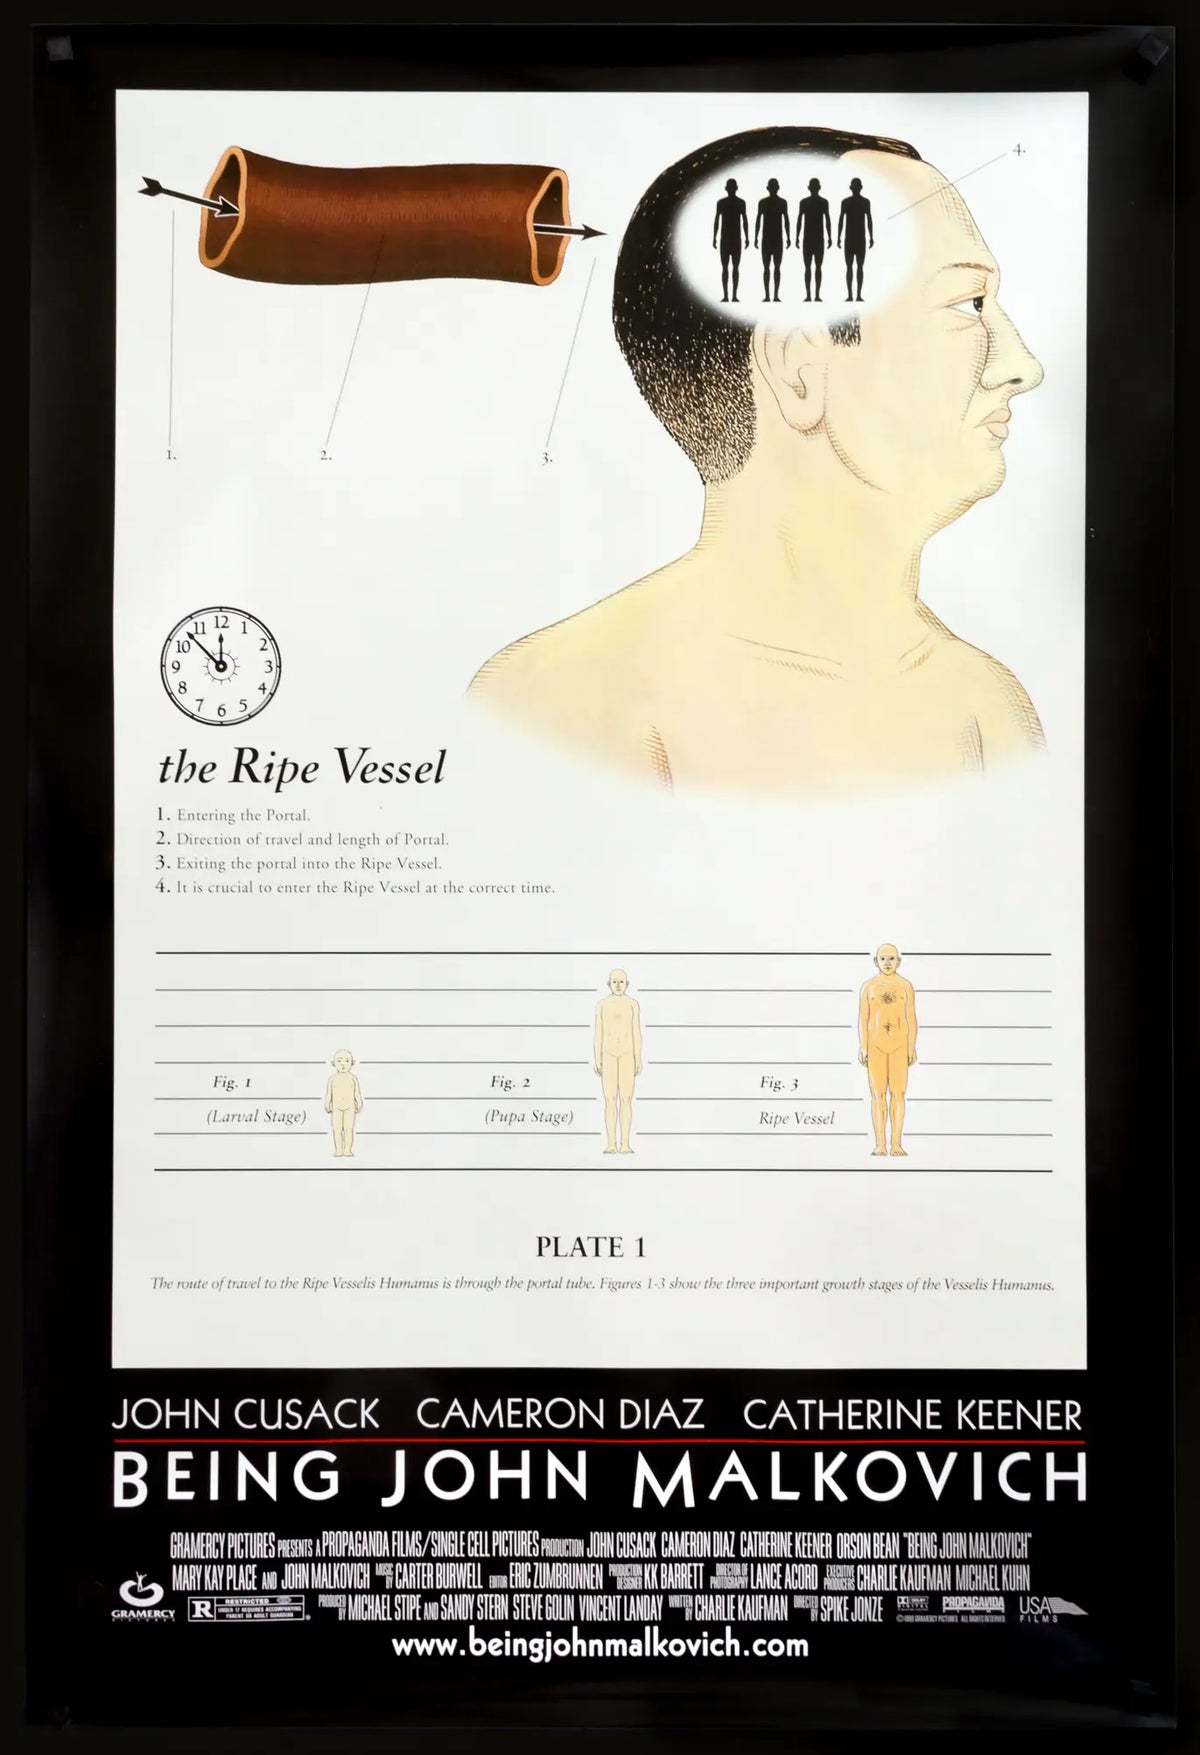 Being John Malkovich (1999) original movie poster for sale at Original Film Art